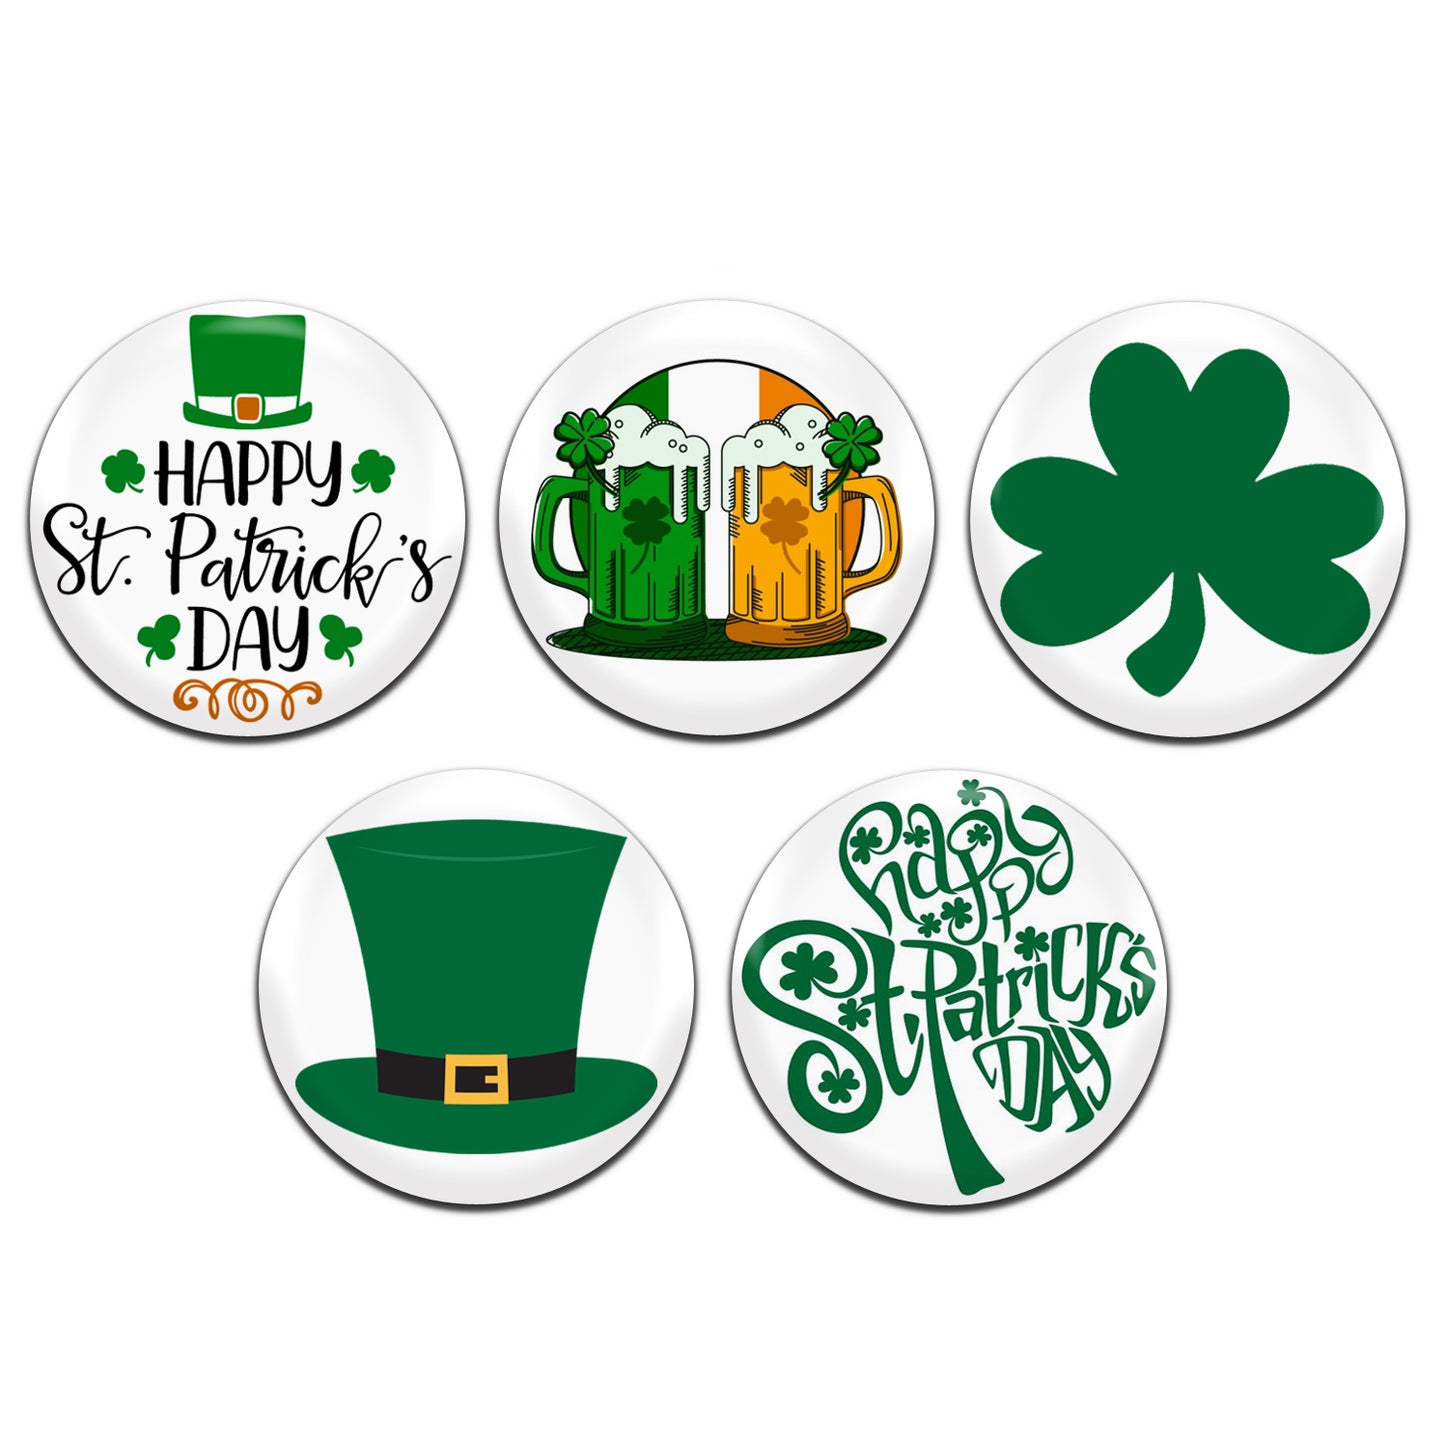 St Patrick's Day Irish Ireland 25mm / 1 Inch D-Pin Button Badges (5x Set)